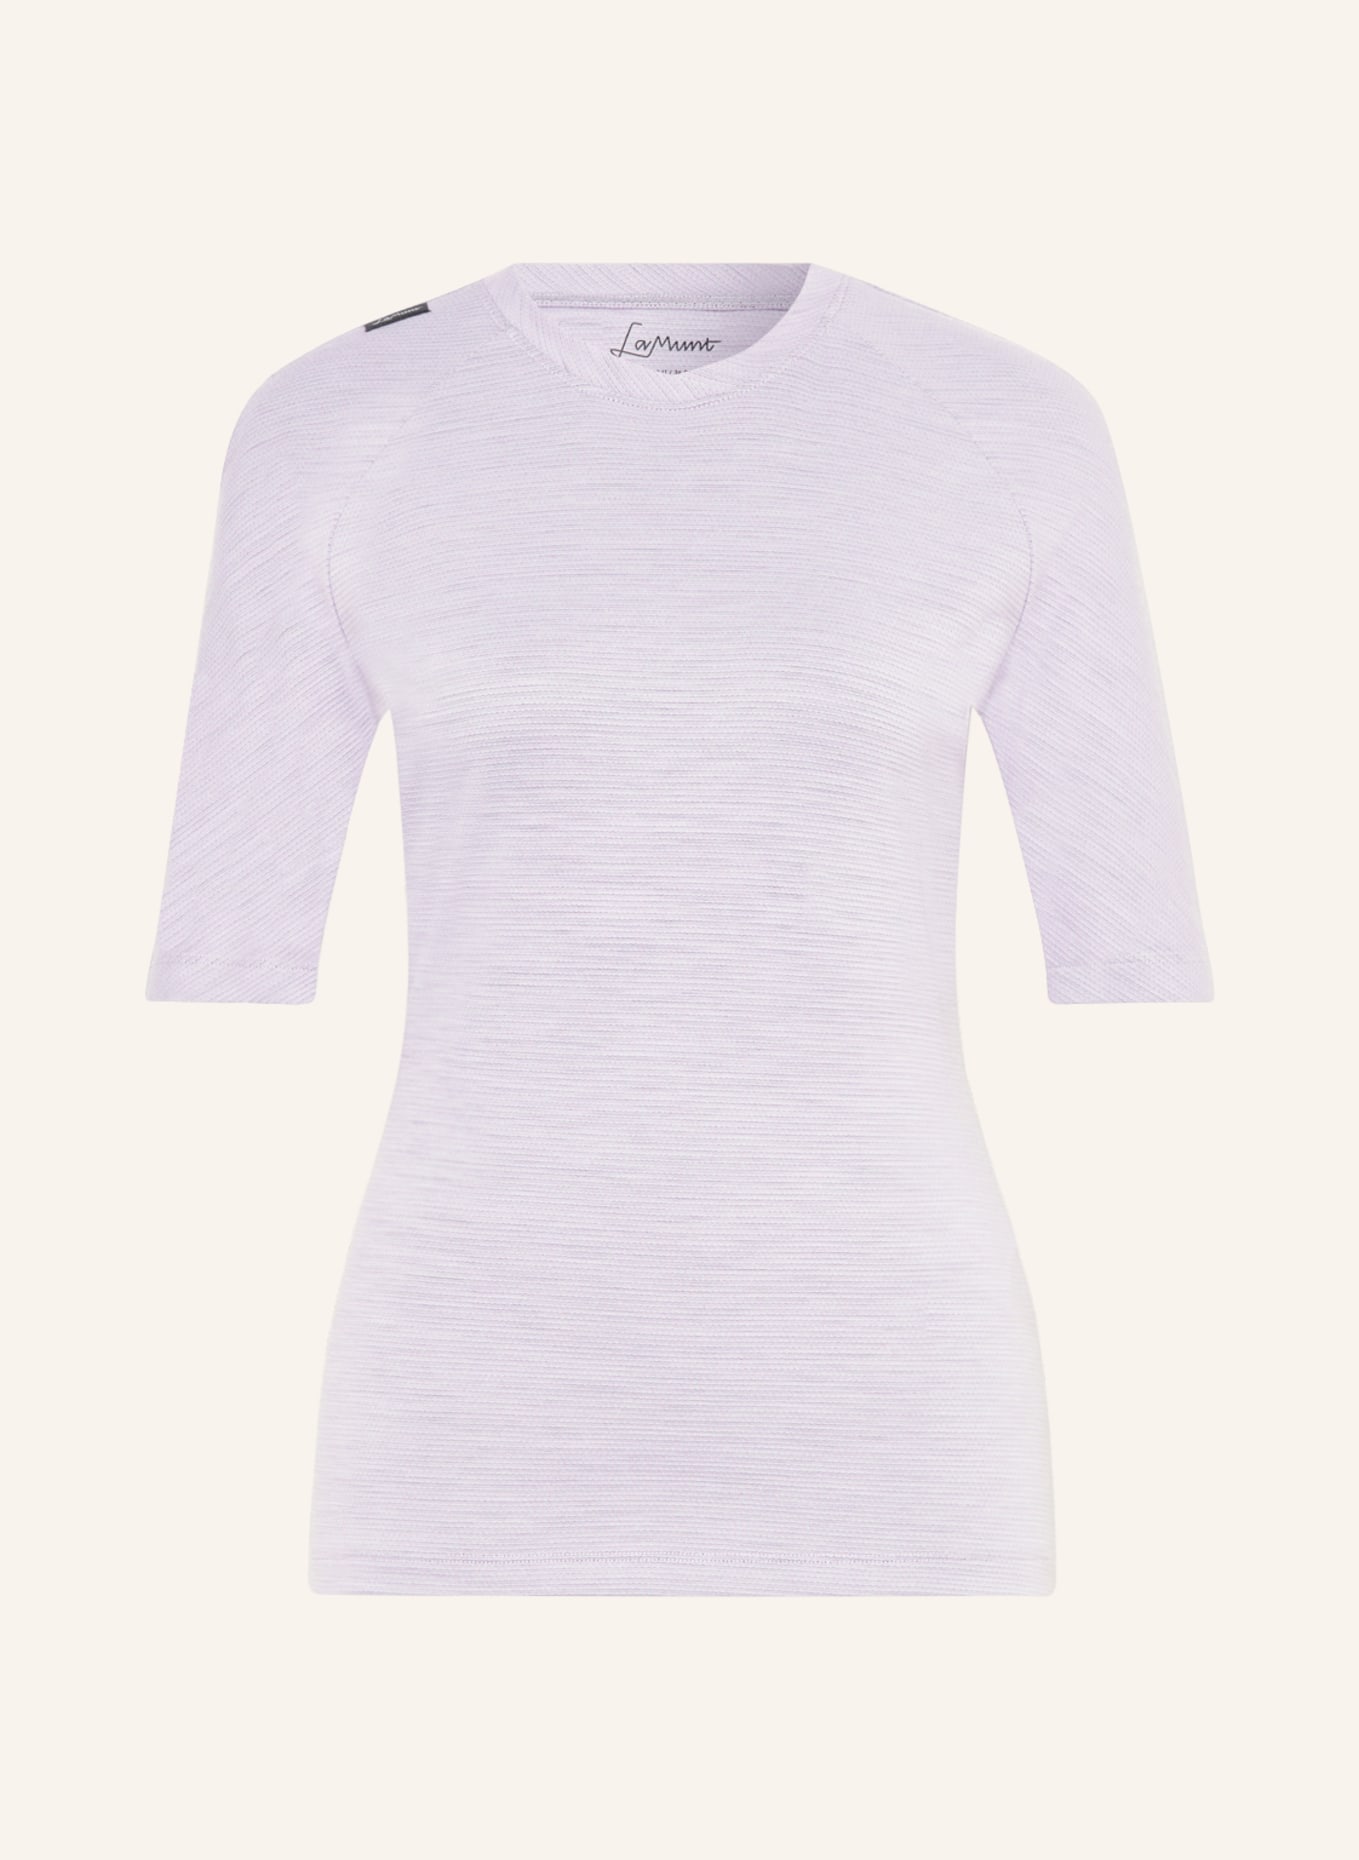 LaMunt T-Shirt MARTINE mit Merinowolle, Farbe: HELLLILA (Bild 1)